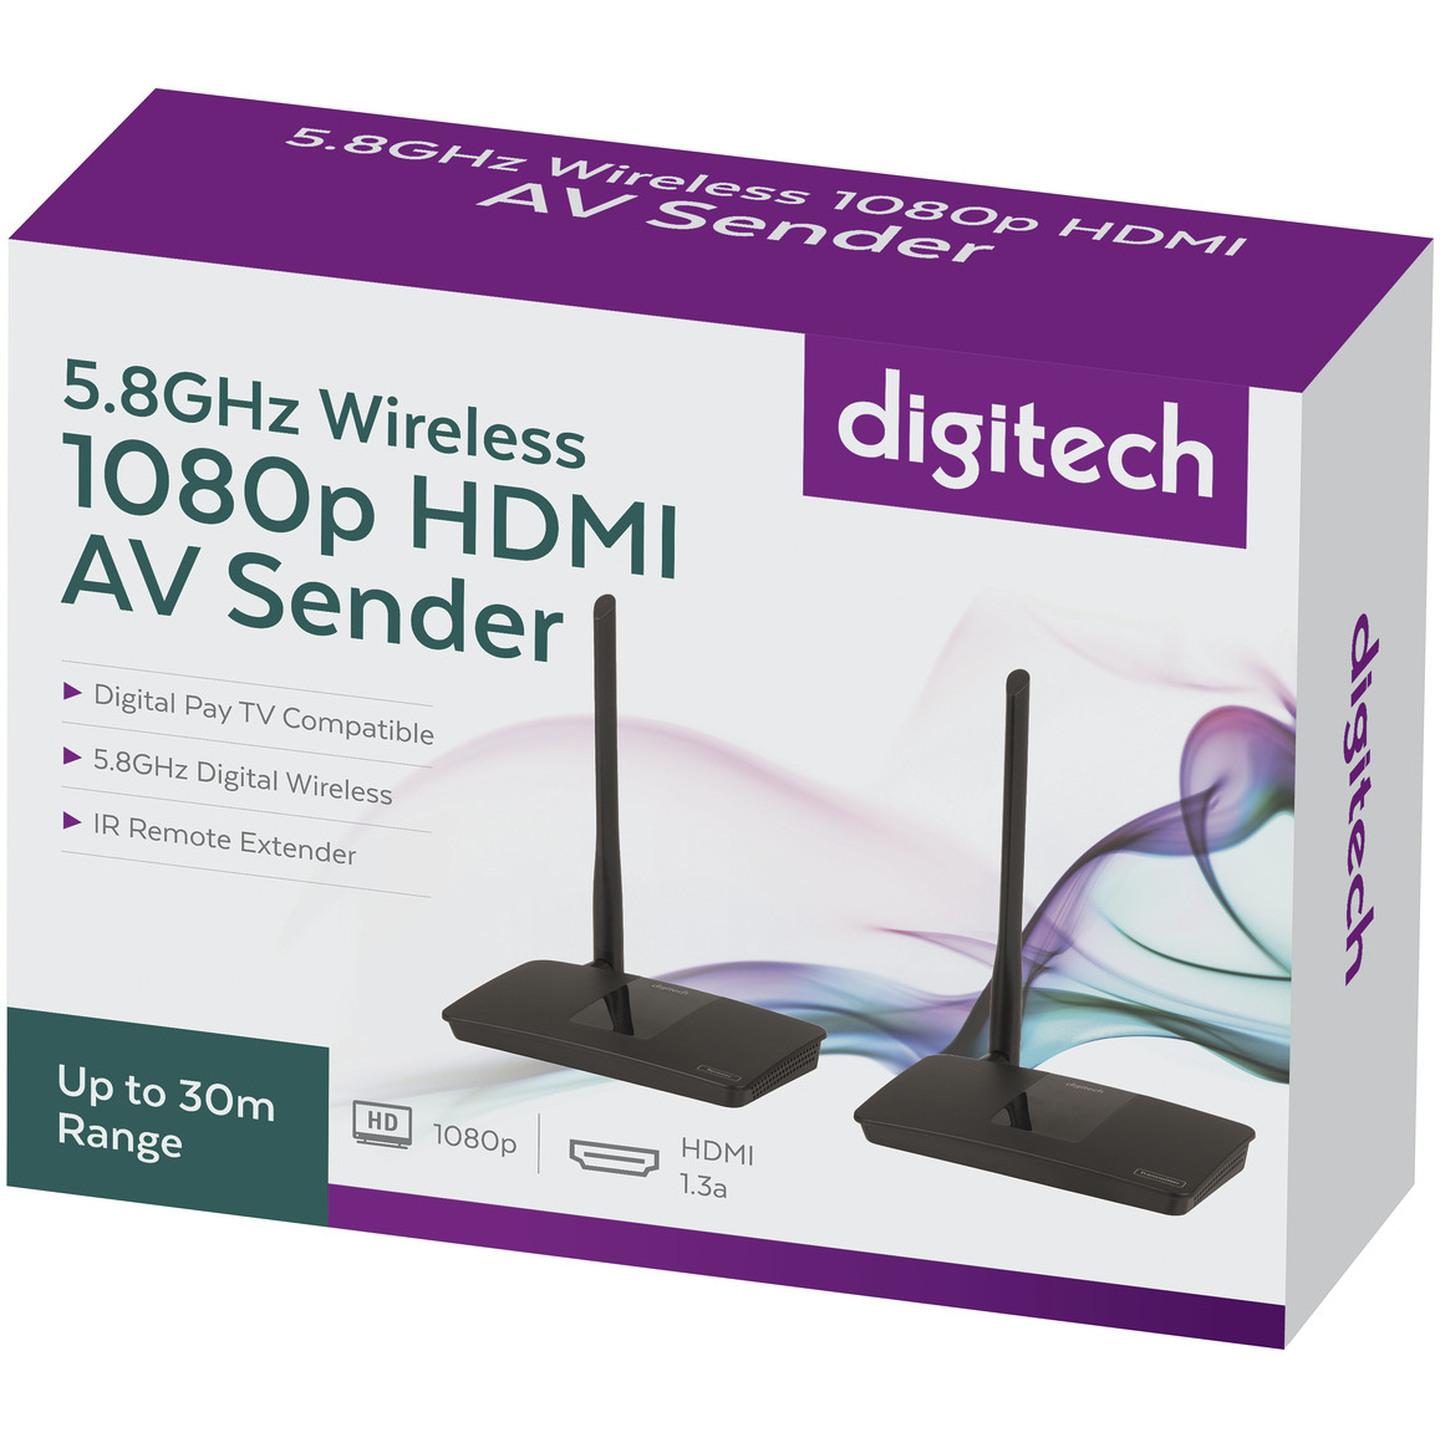 5.8GHz HDMI 1080p Wireless AV Sender